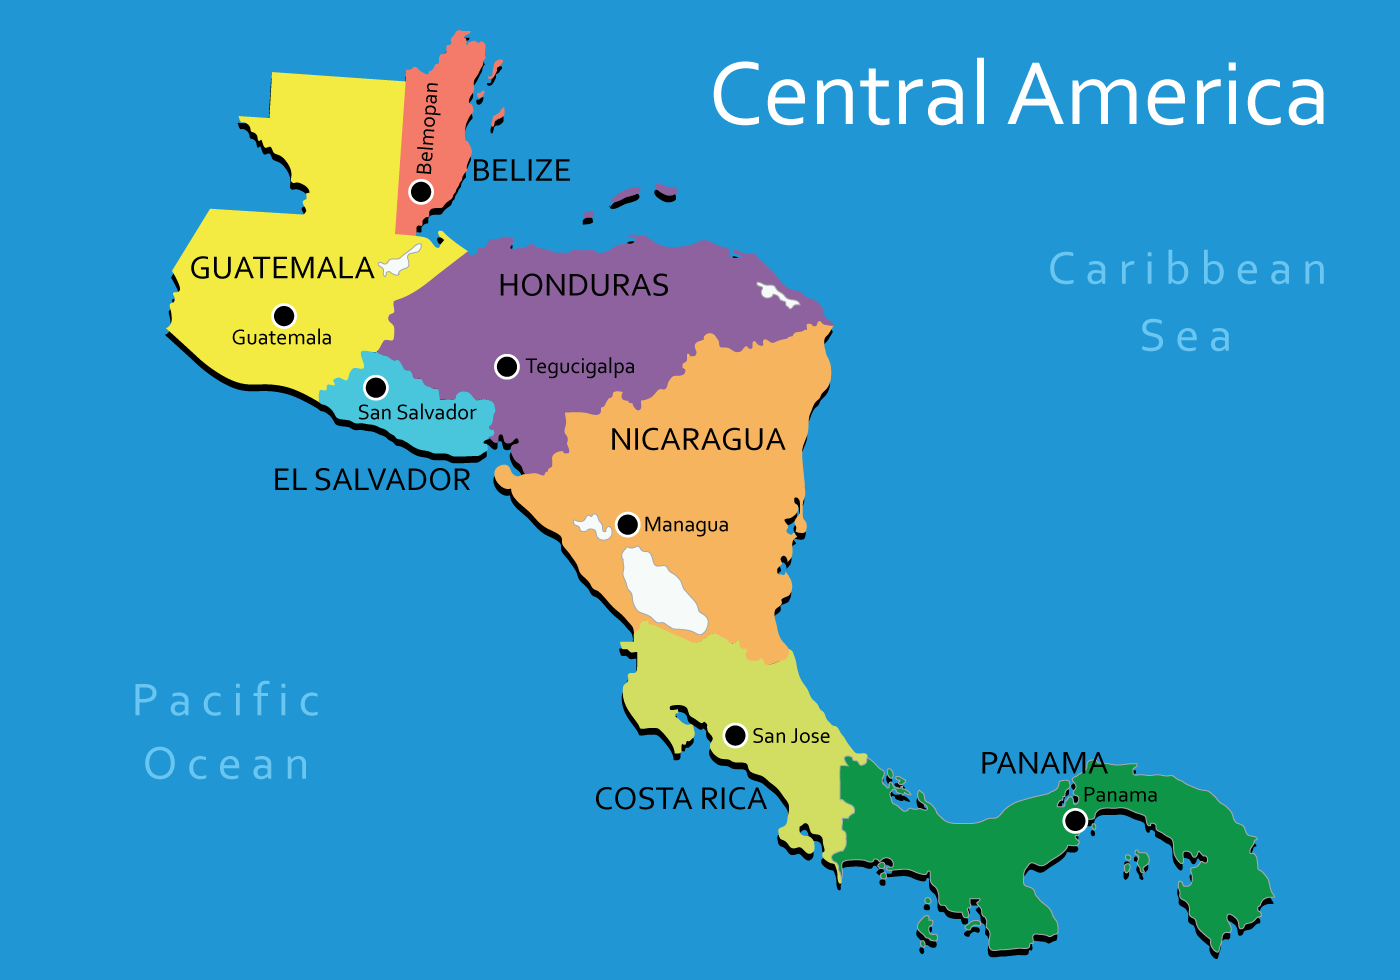 Of the countries of central. Карта центральной Америки со странами. Центральная Америка на карте Америки. Государства центральной Америки. Государства центральной Америки на карте.